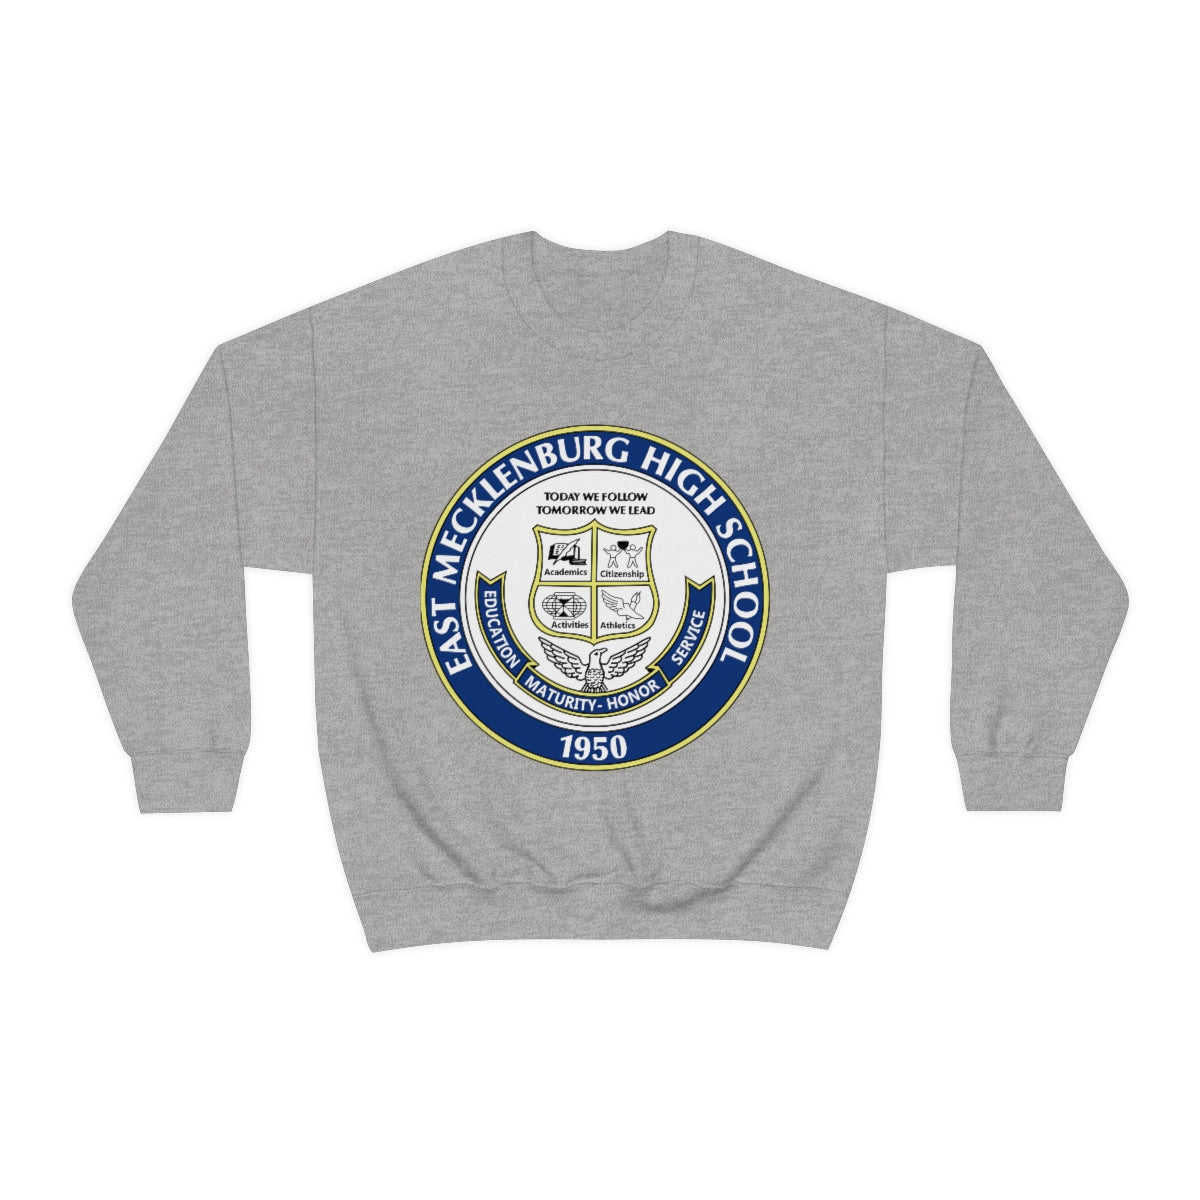 East Meck High School Seal Crewneck Sweatshirt